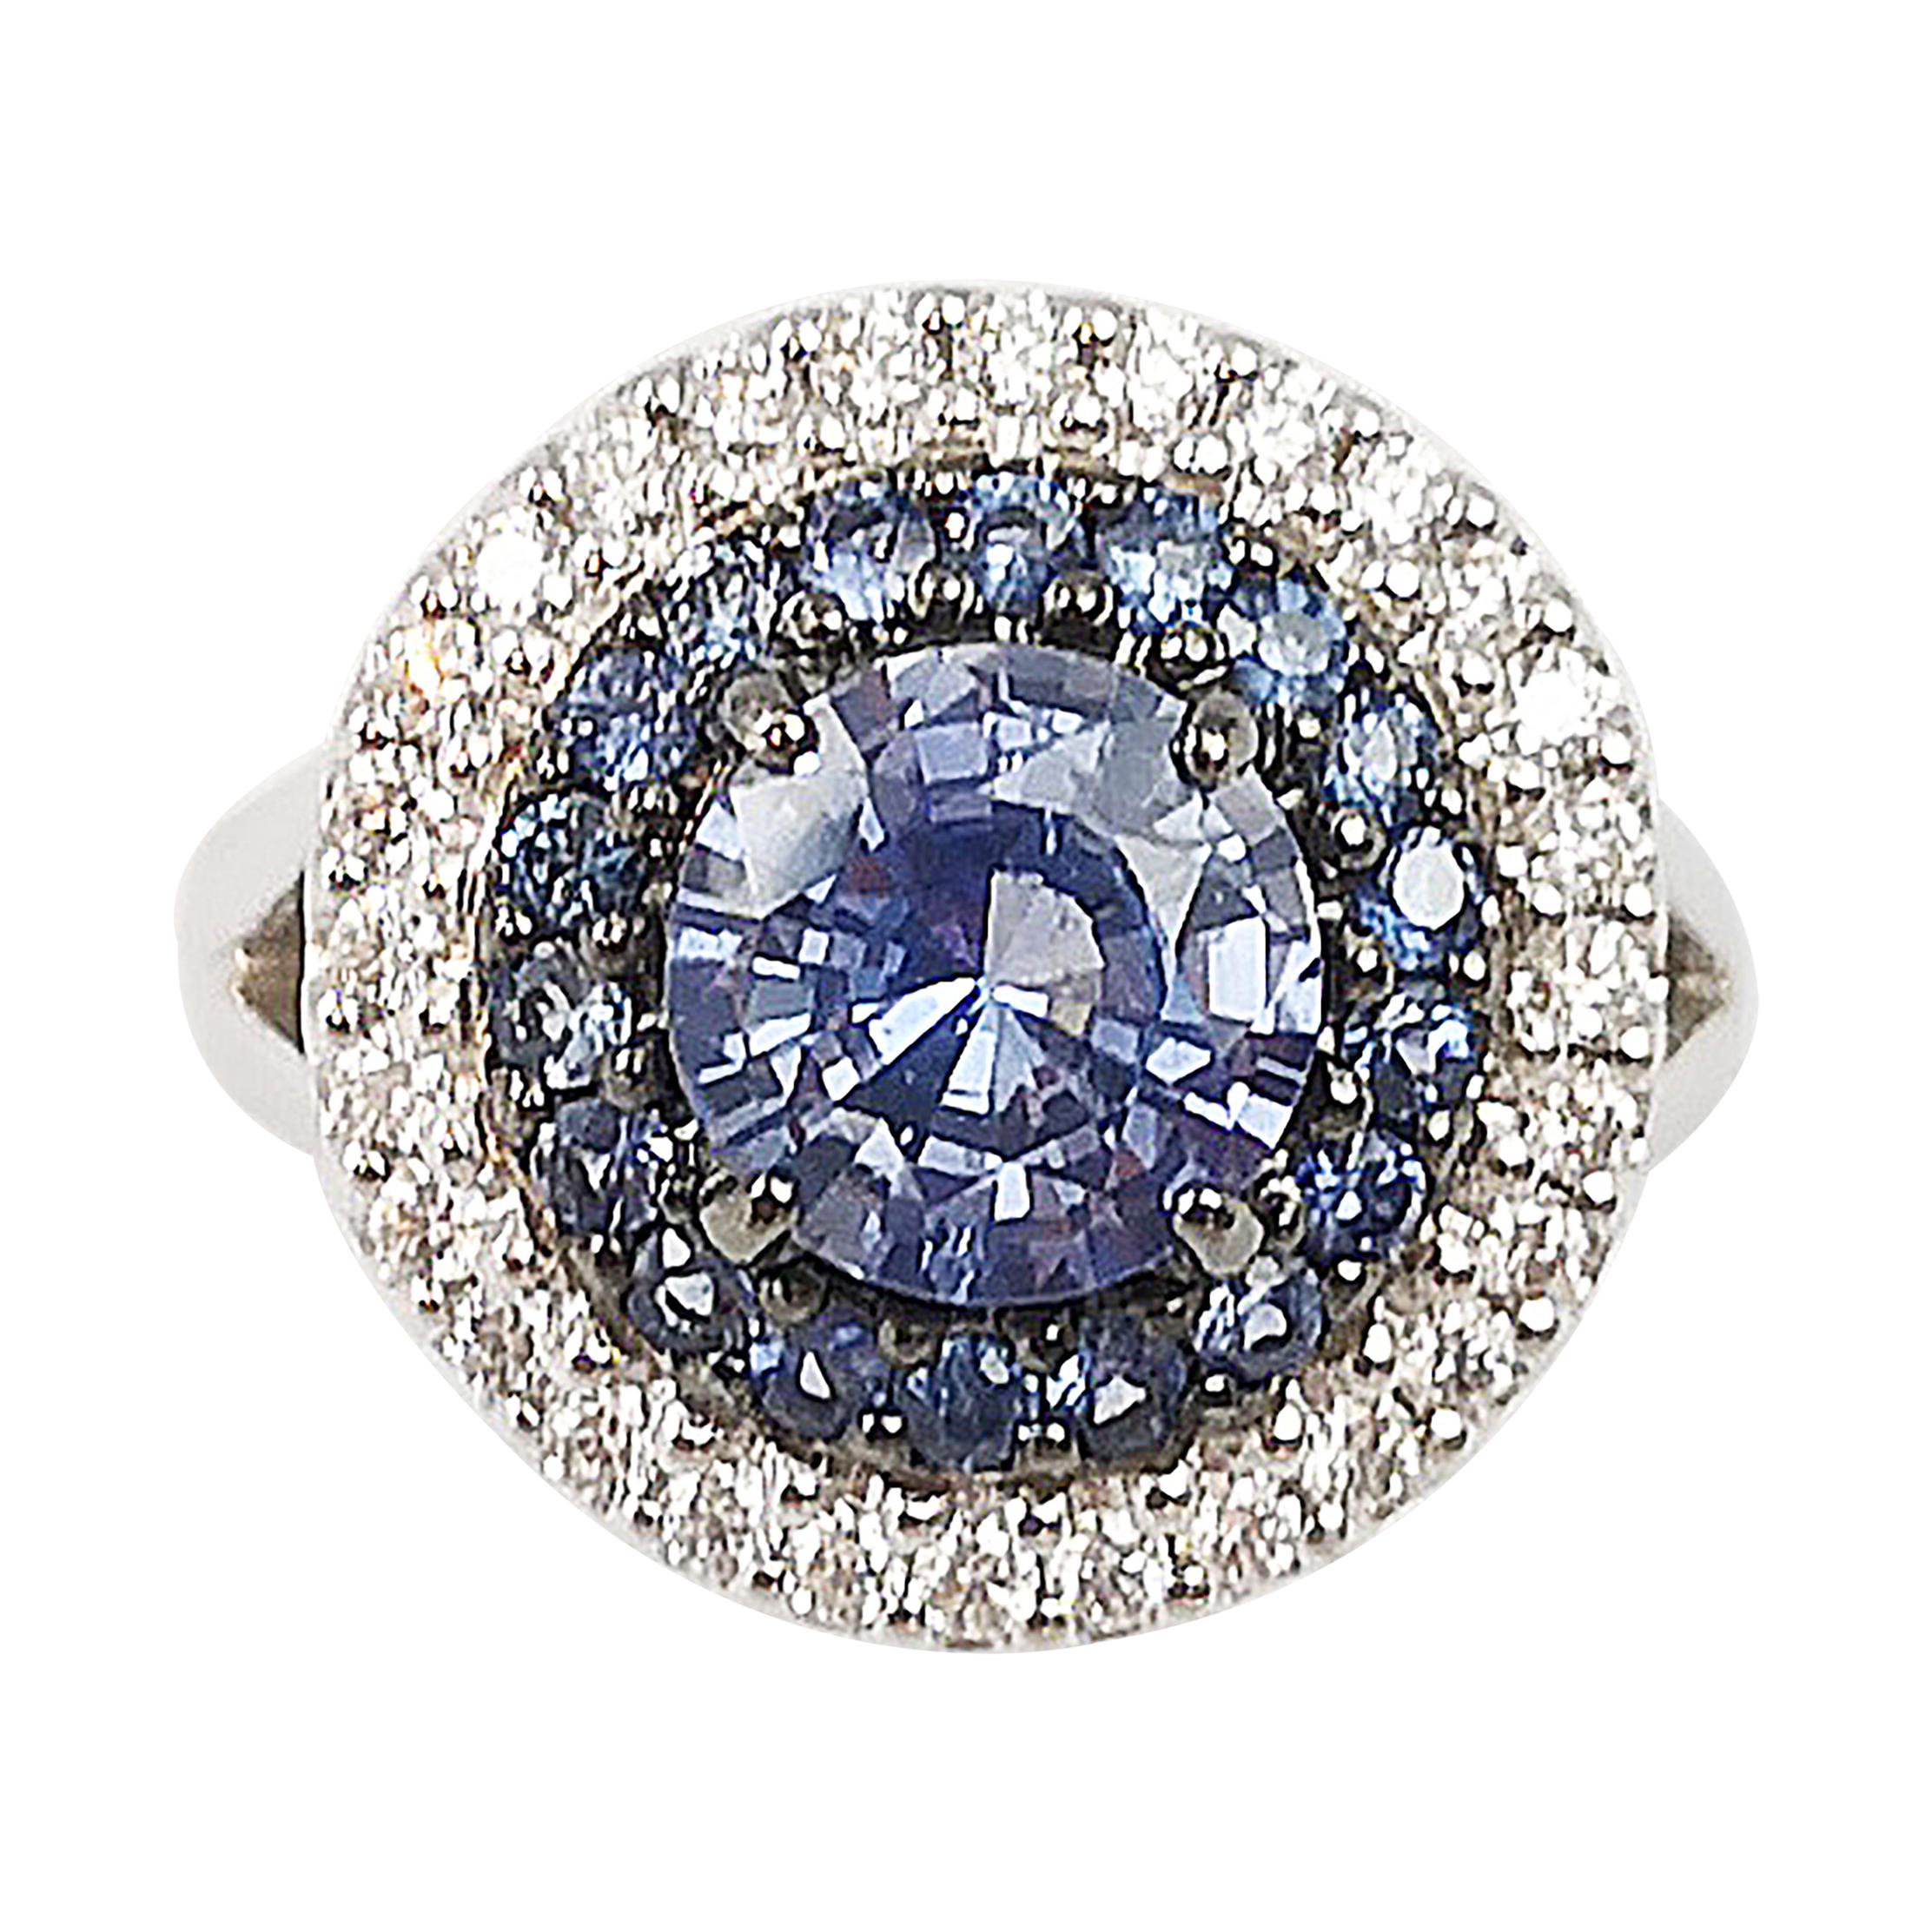 Round Pastel Blue Sapphire with Diamond Ring Set in 18 Karat White Gold Settings